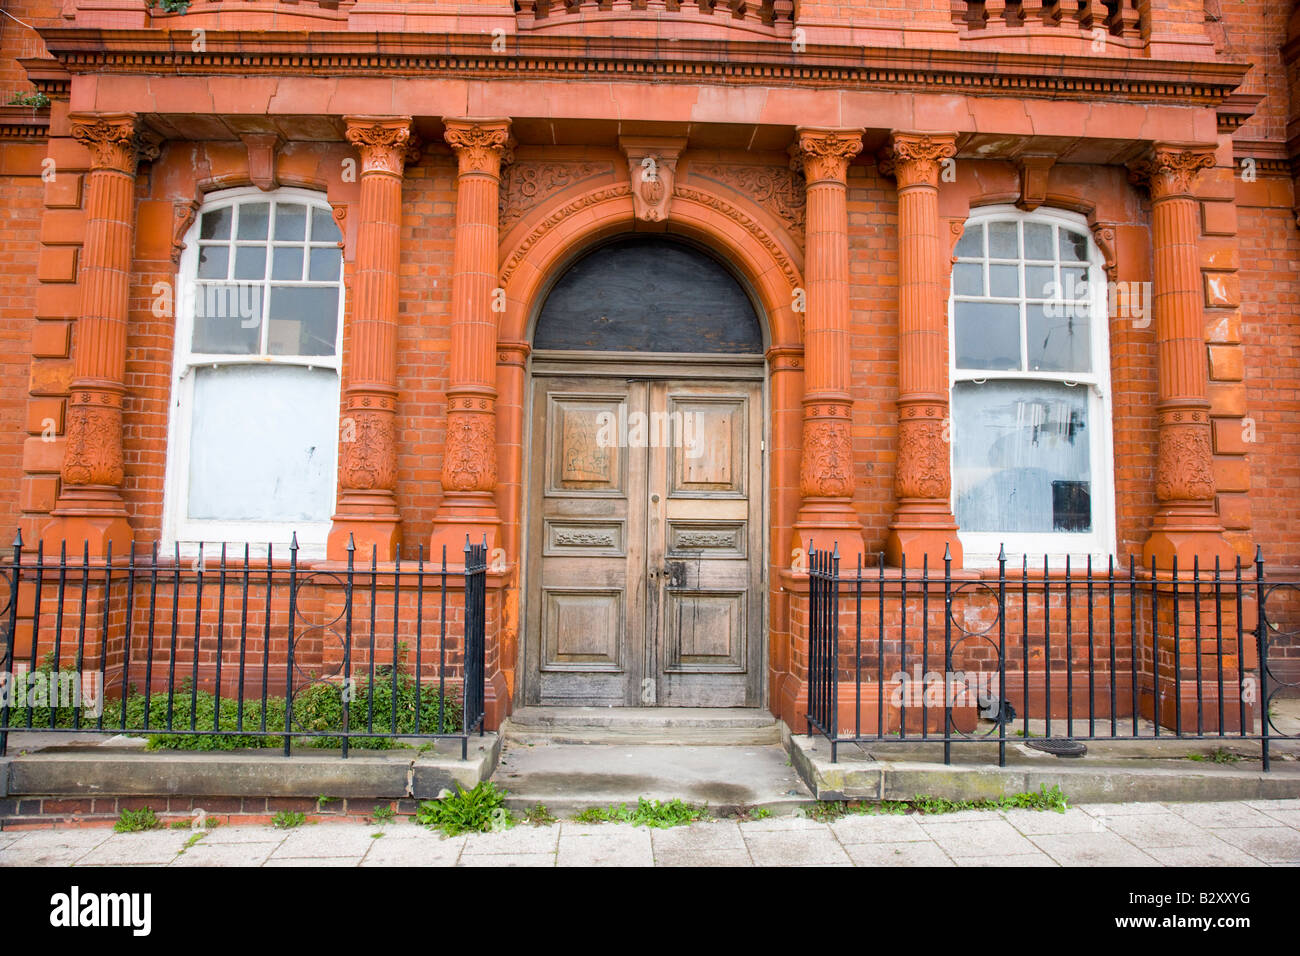 Elaborate red brick facade door and entrance to building Stock Photo